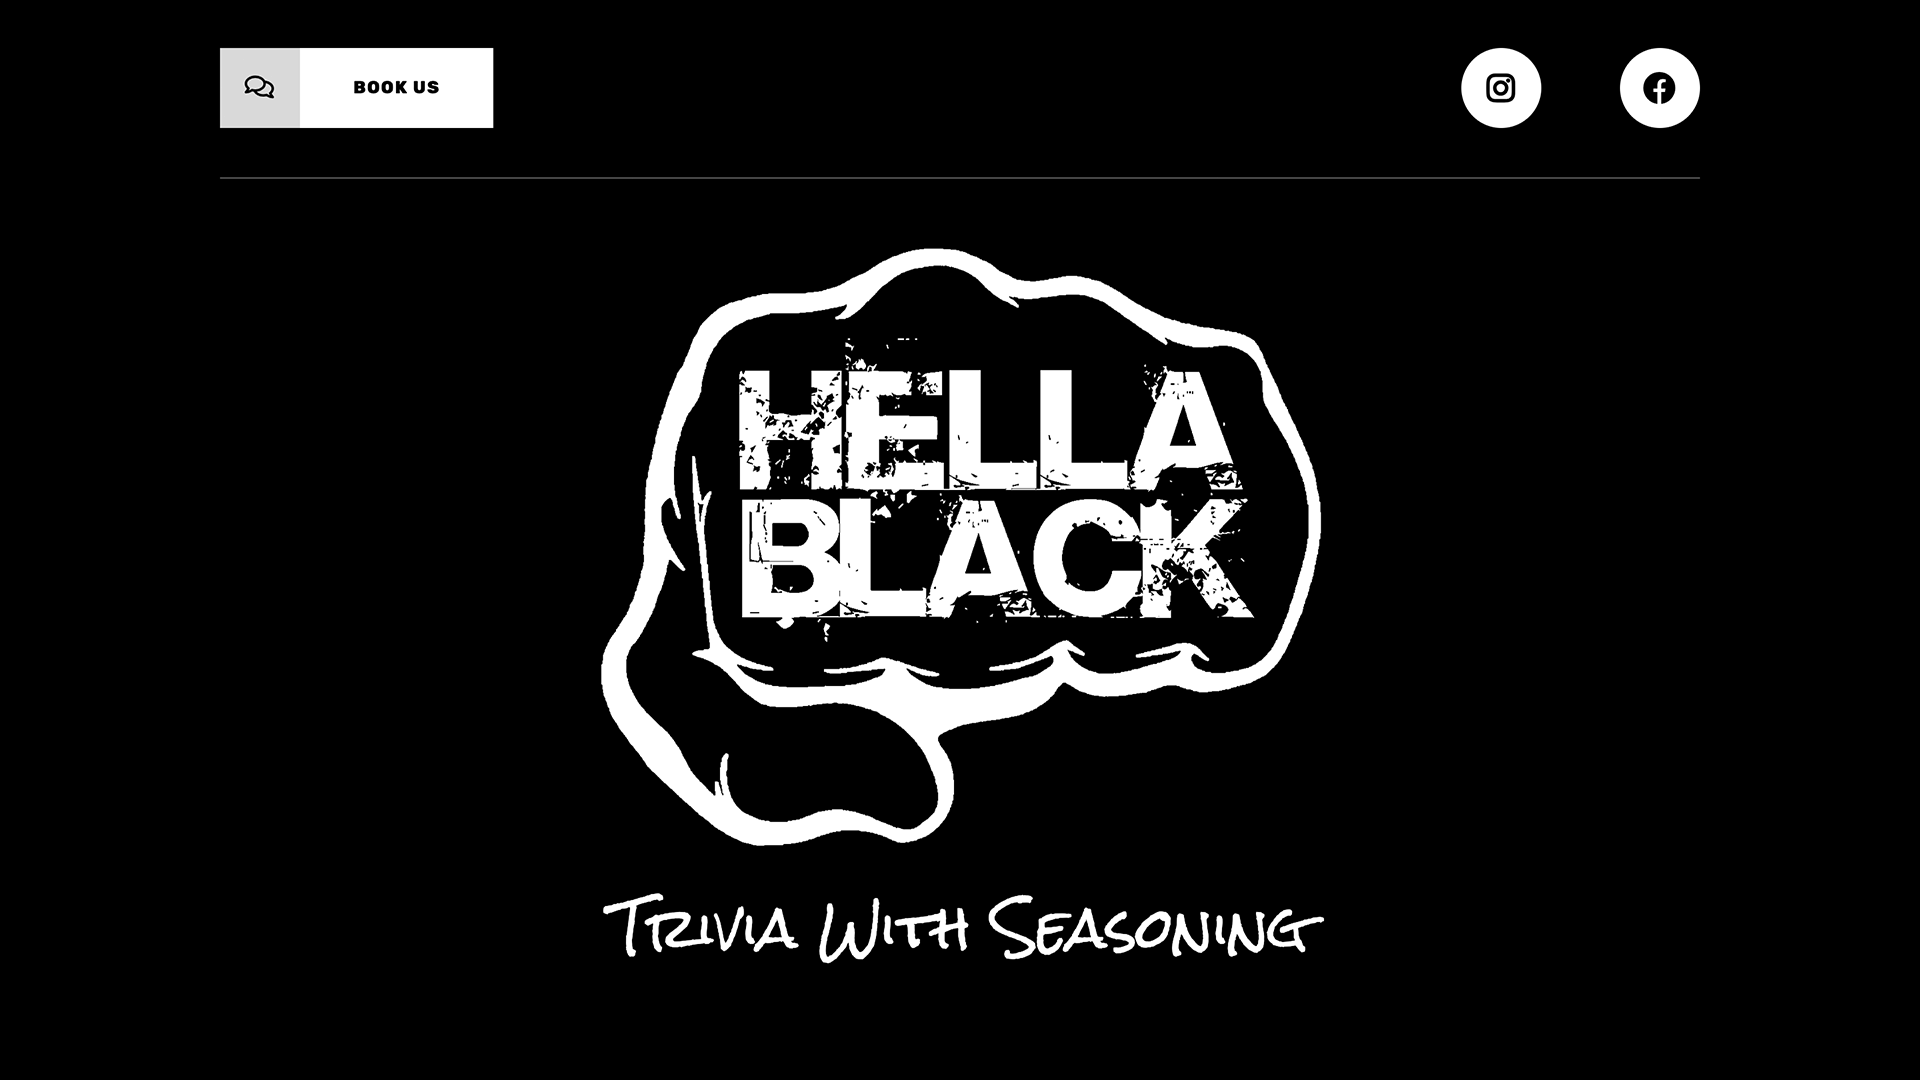 Hella Black Trivia website